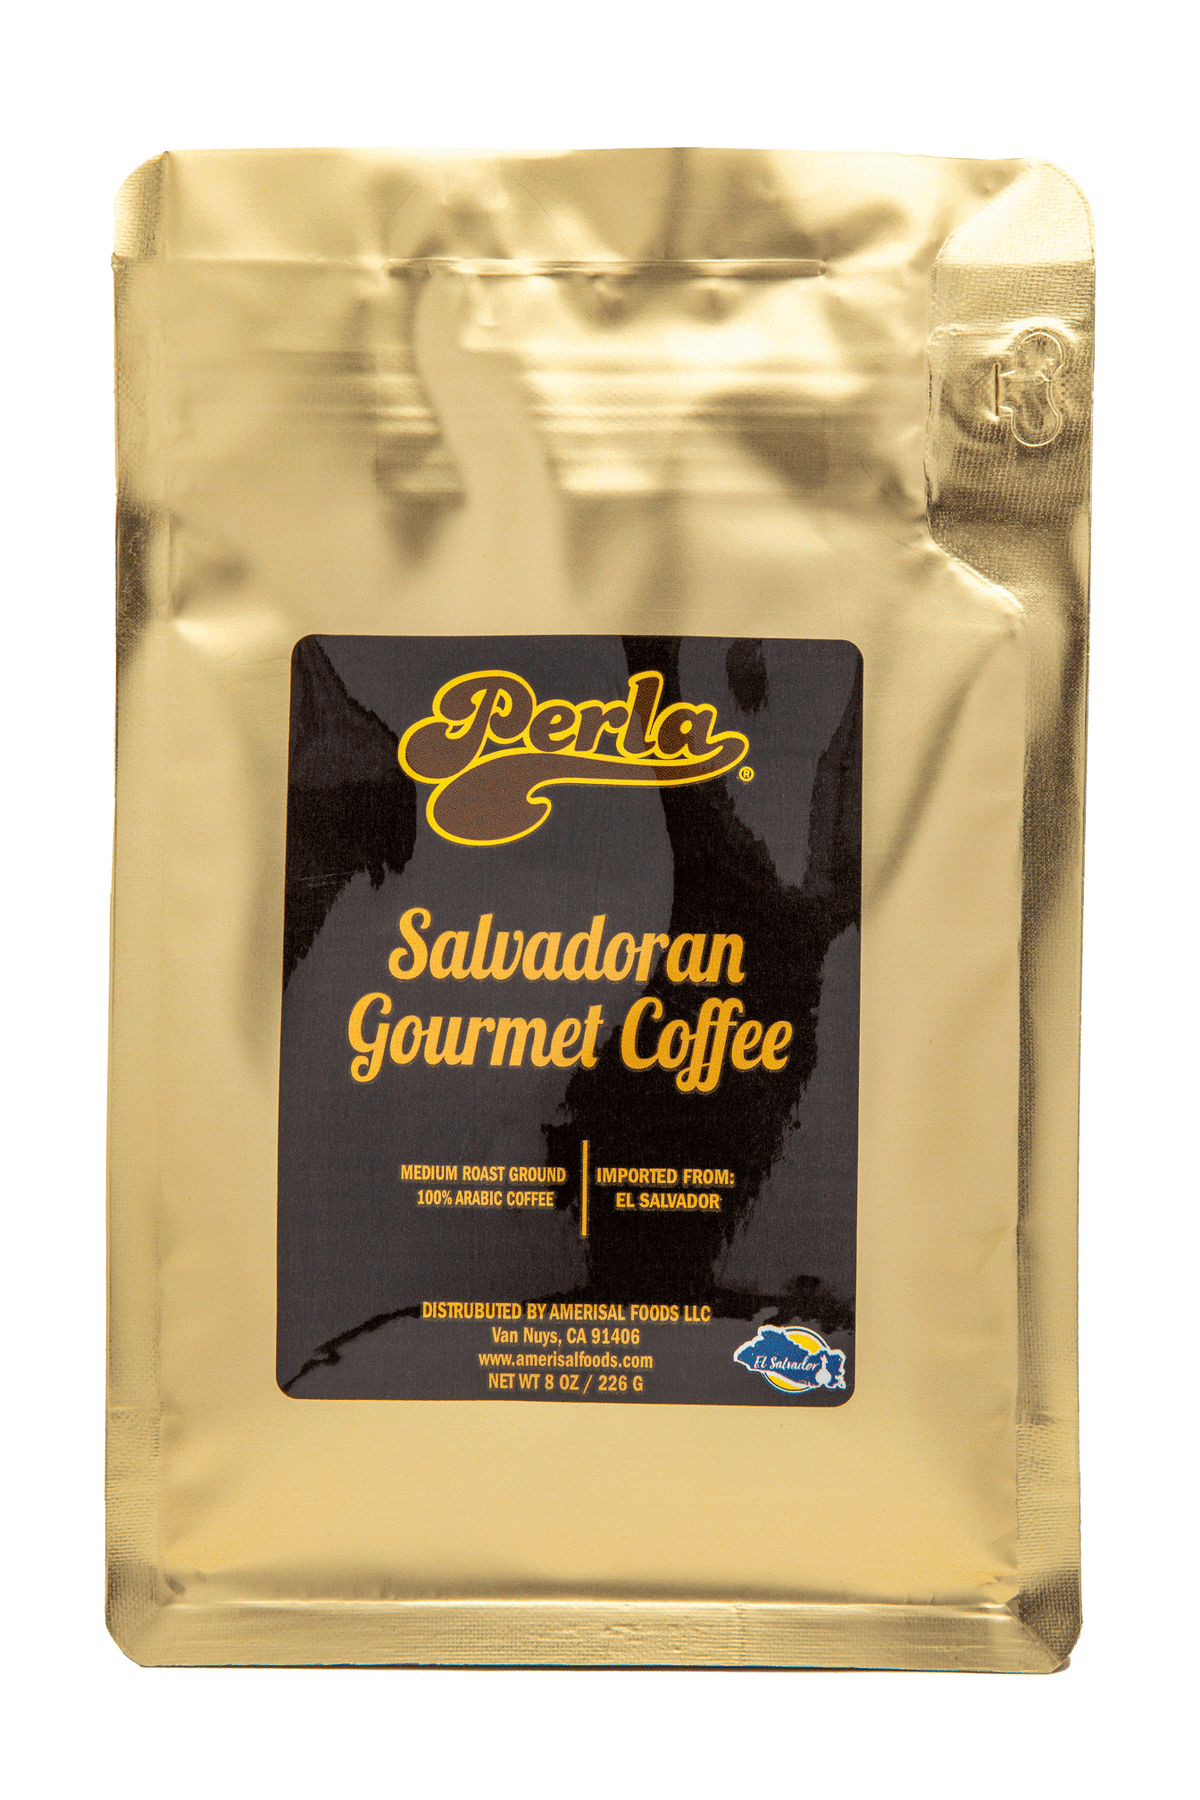 Perla Café Gourmet Salvadoreno (Salvadoran Gourmet Coffee) 8 oz